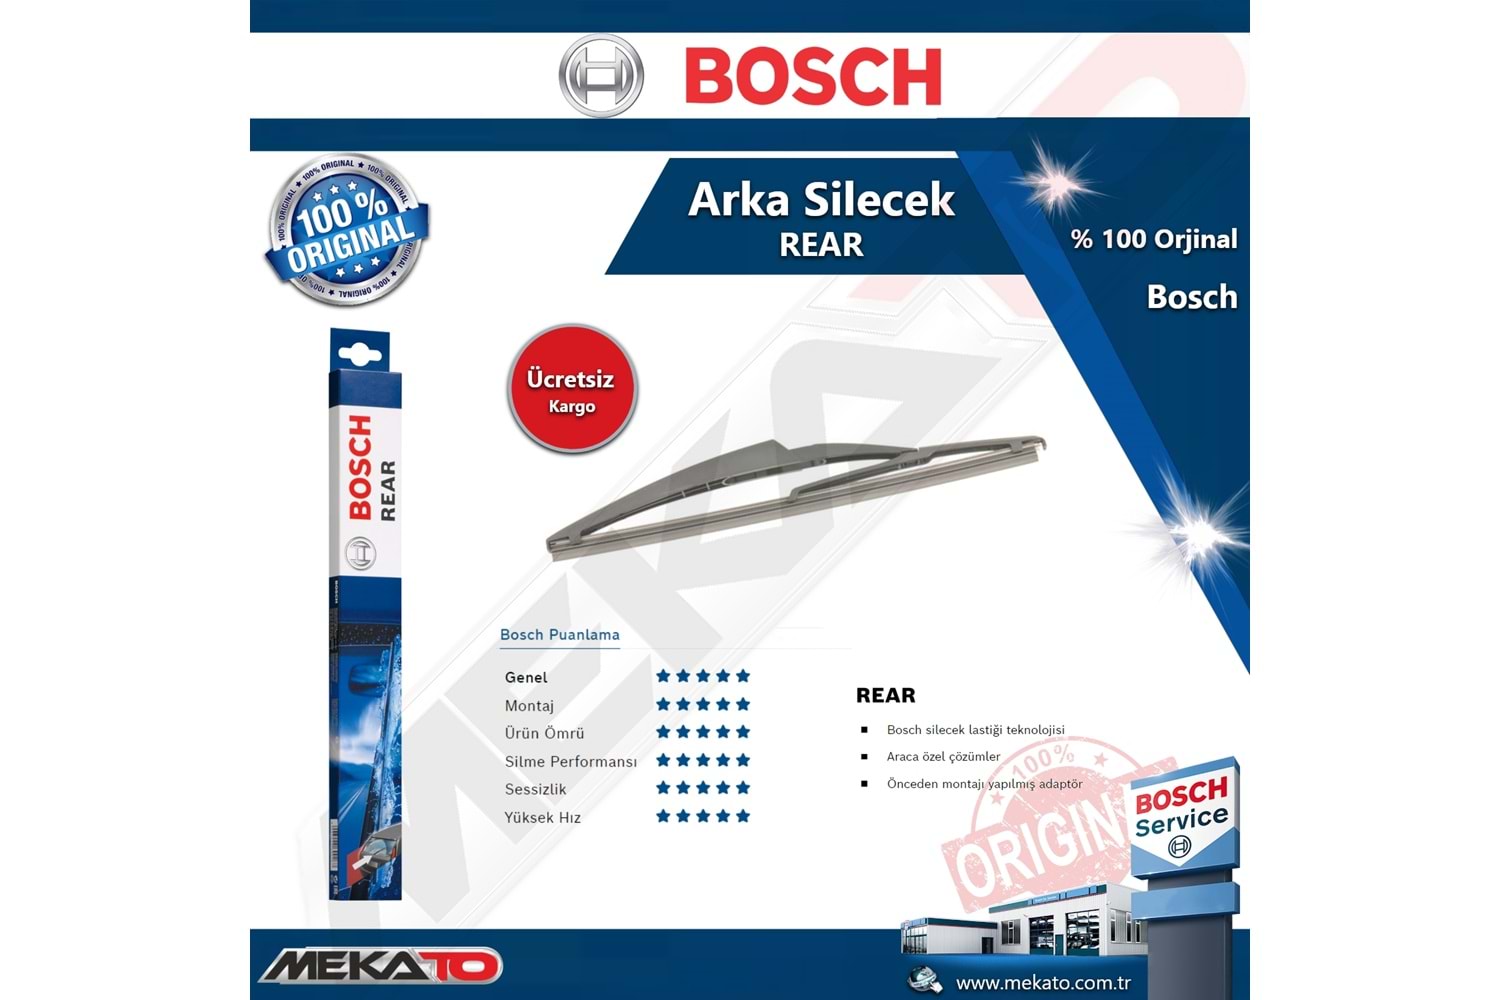 Citroen C4 Arka Silecek Bosch Rear 2010-2020